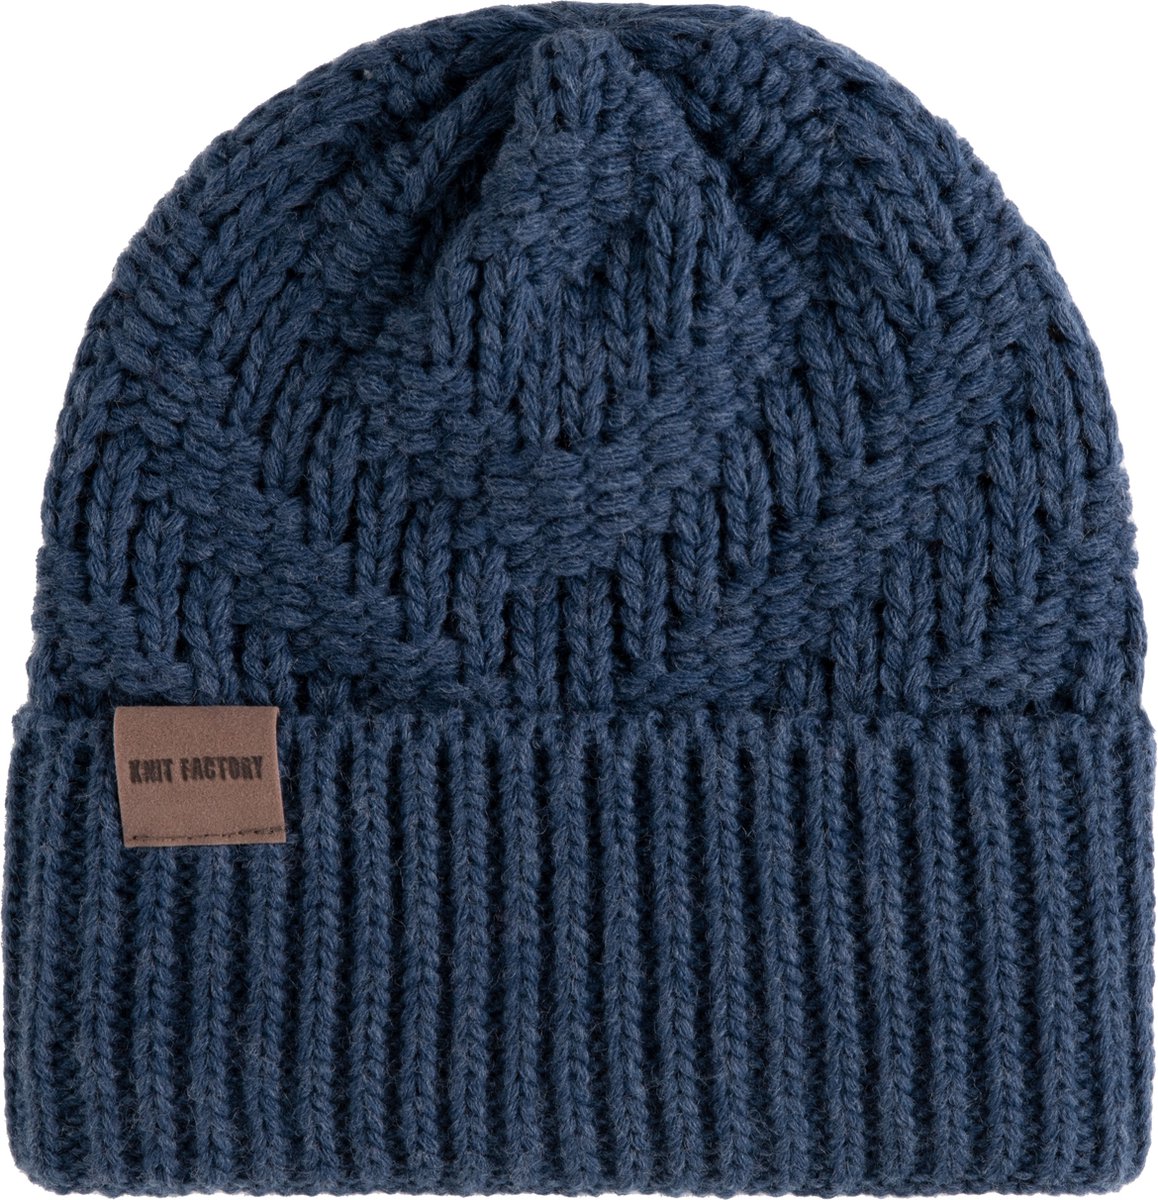 Knit Factory Sally Gebreide Muts Heren & Dames - Beanie hat - Jeans - Grofgebreid - Warme donkerblauwe Wintermuts - Unisex - One Size